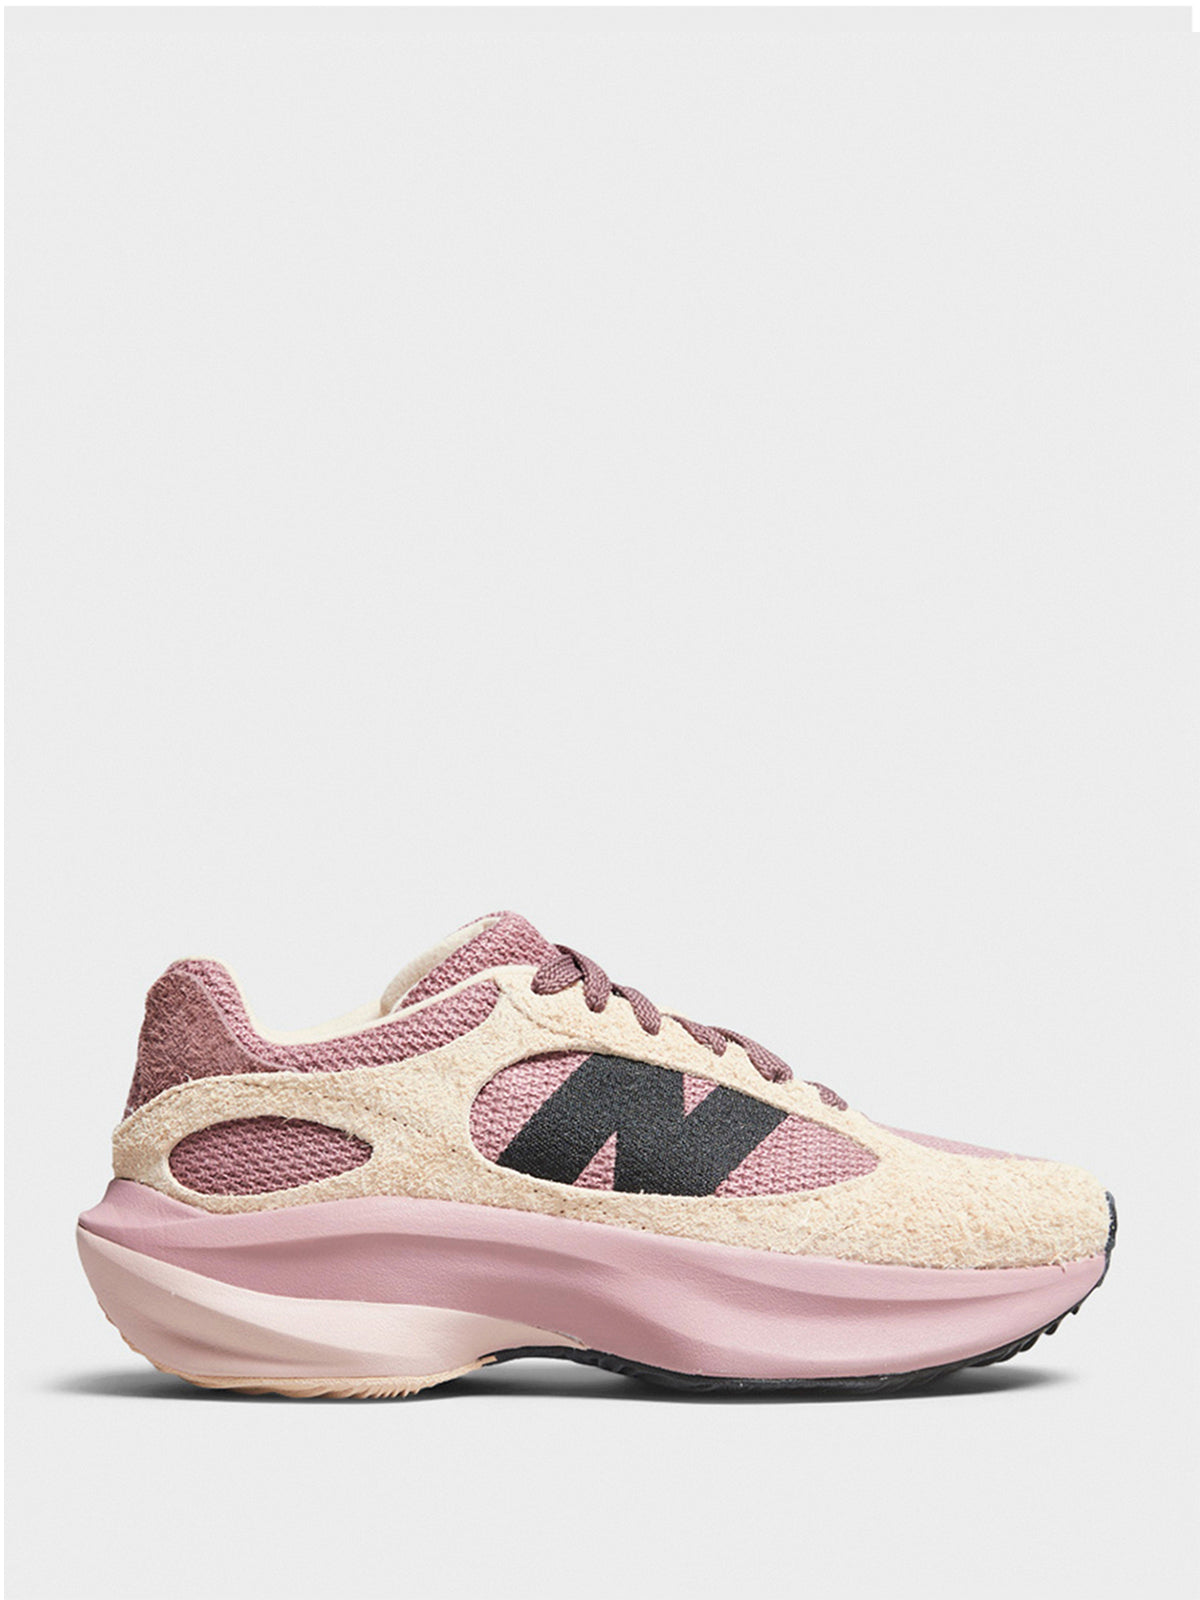 WRPD Sneakers in Pink